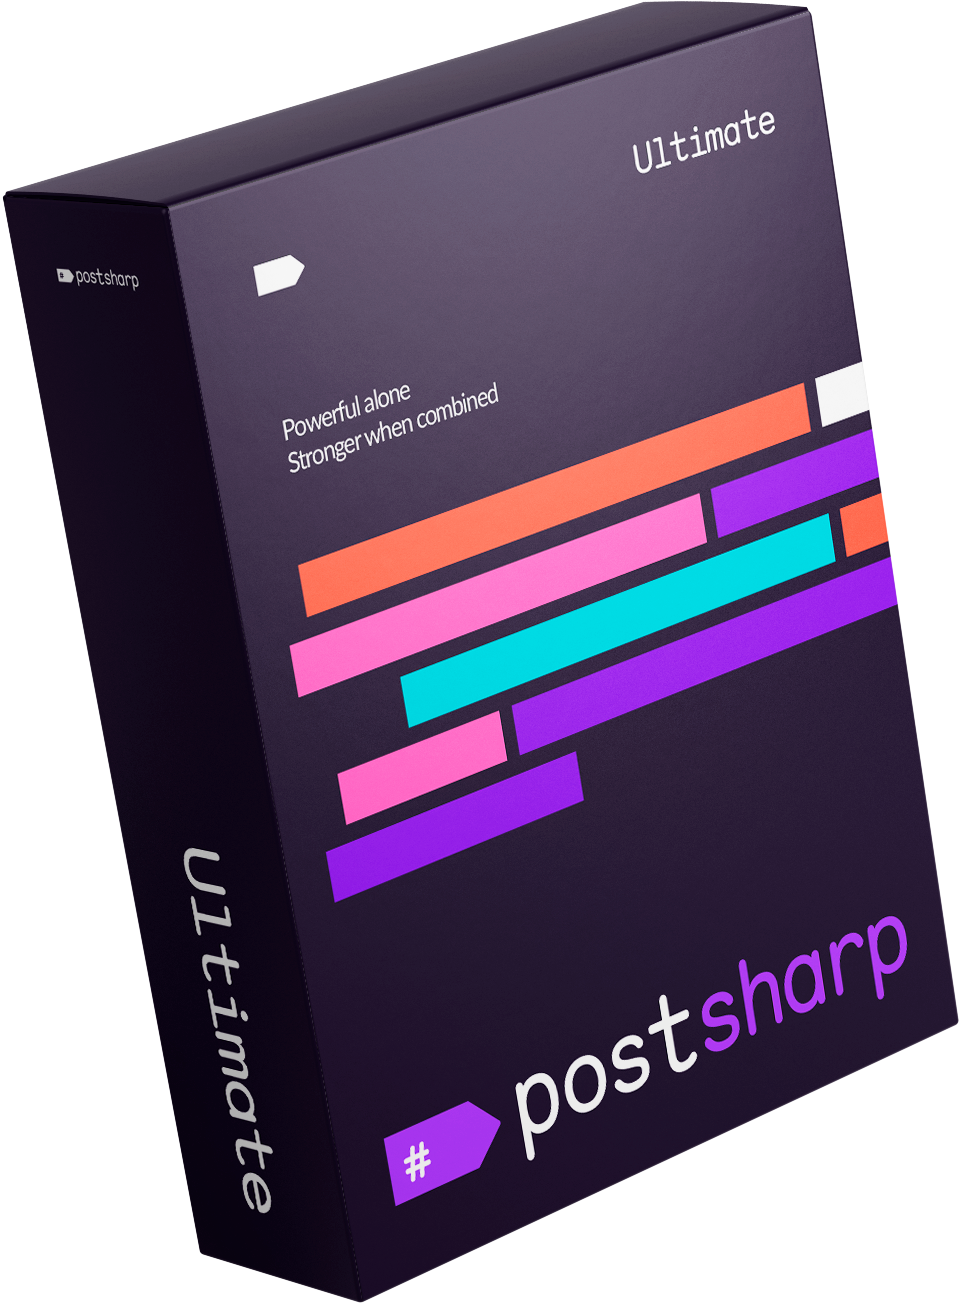 PostSharp Ultimate